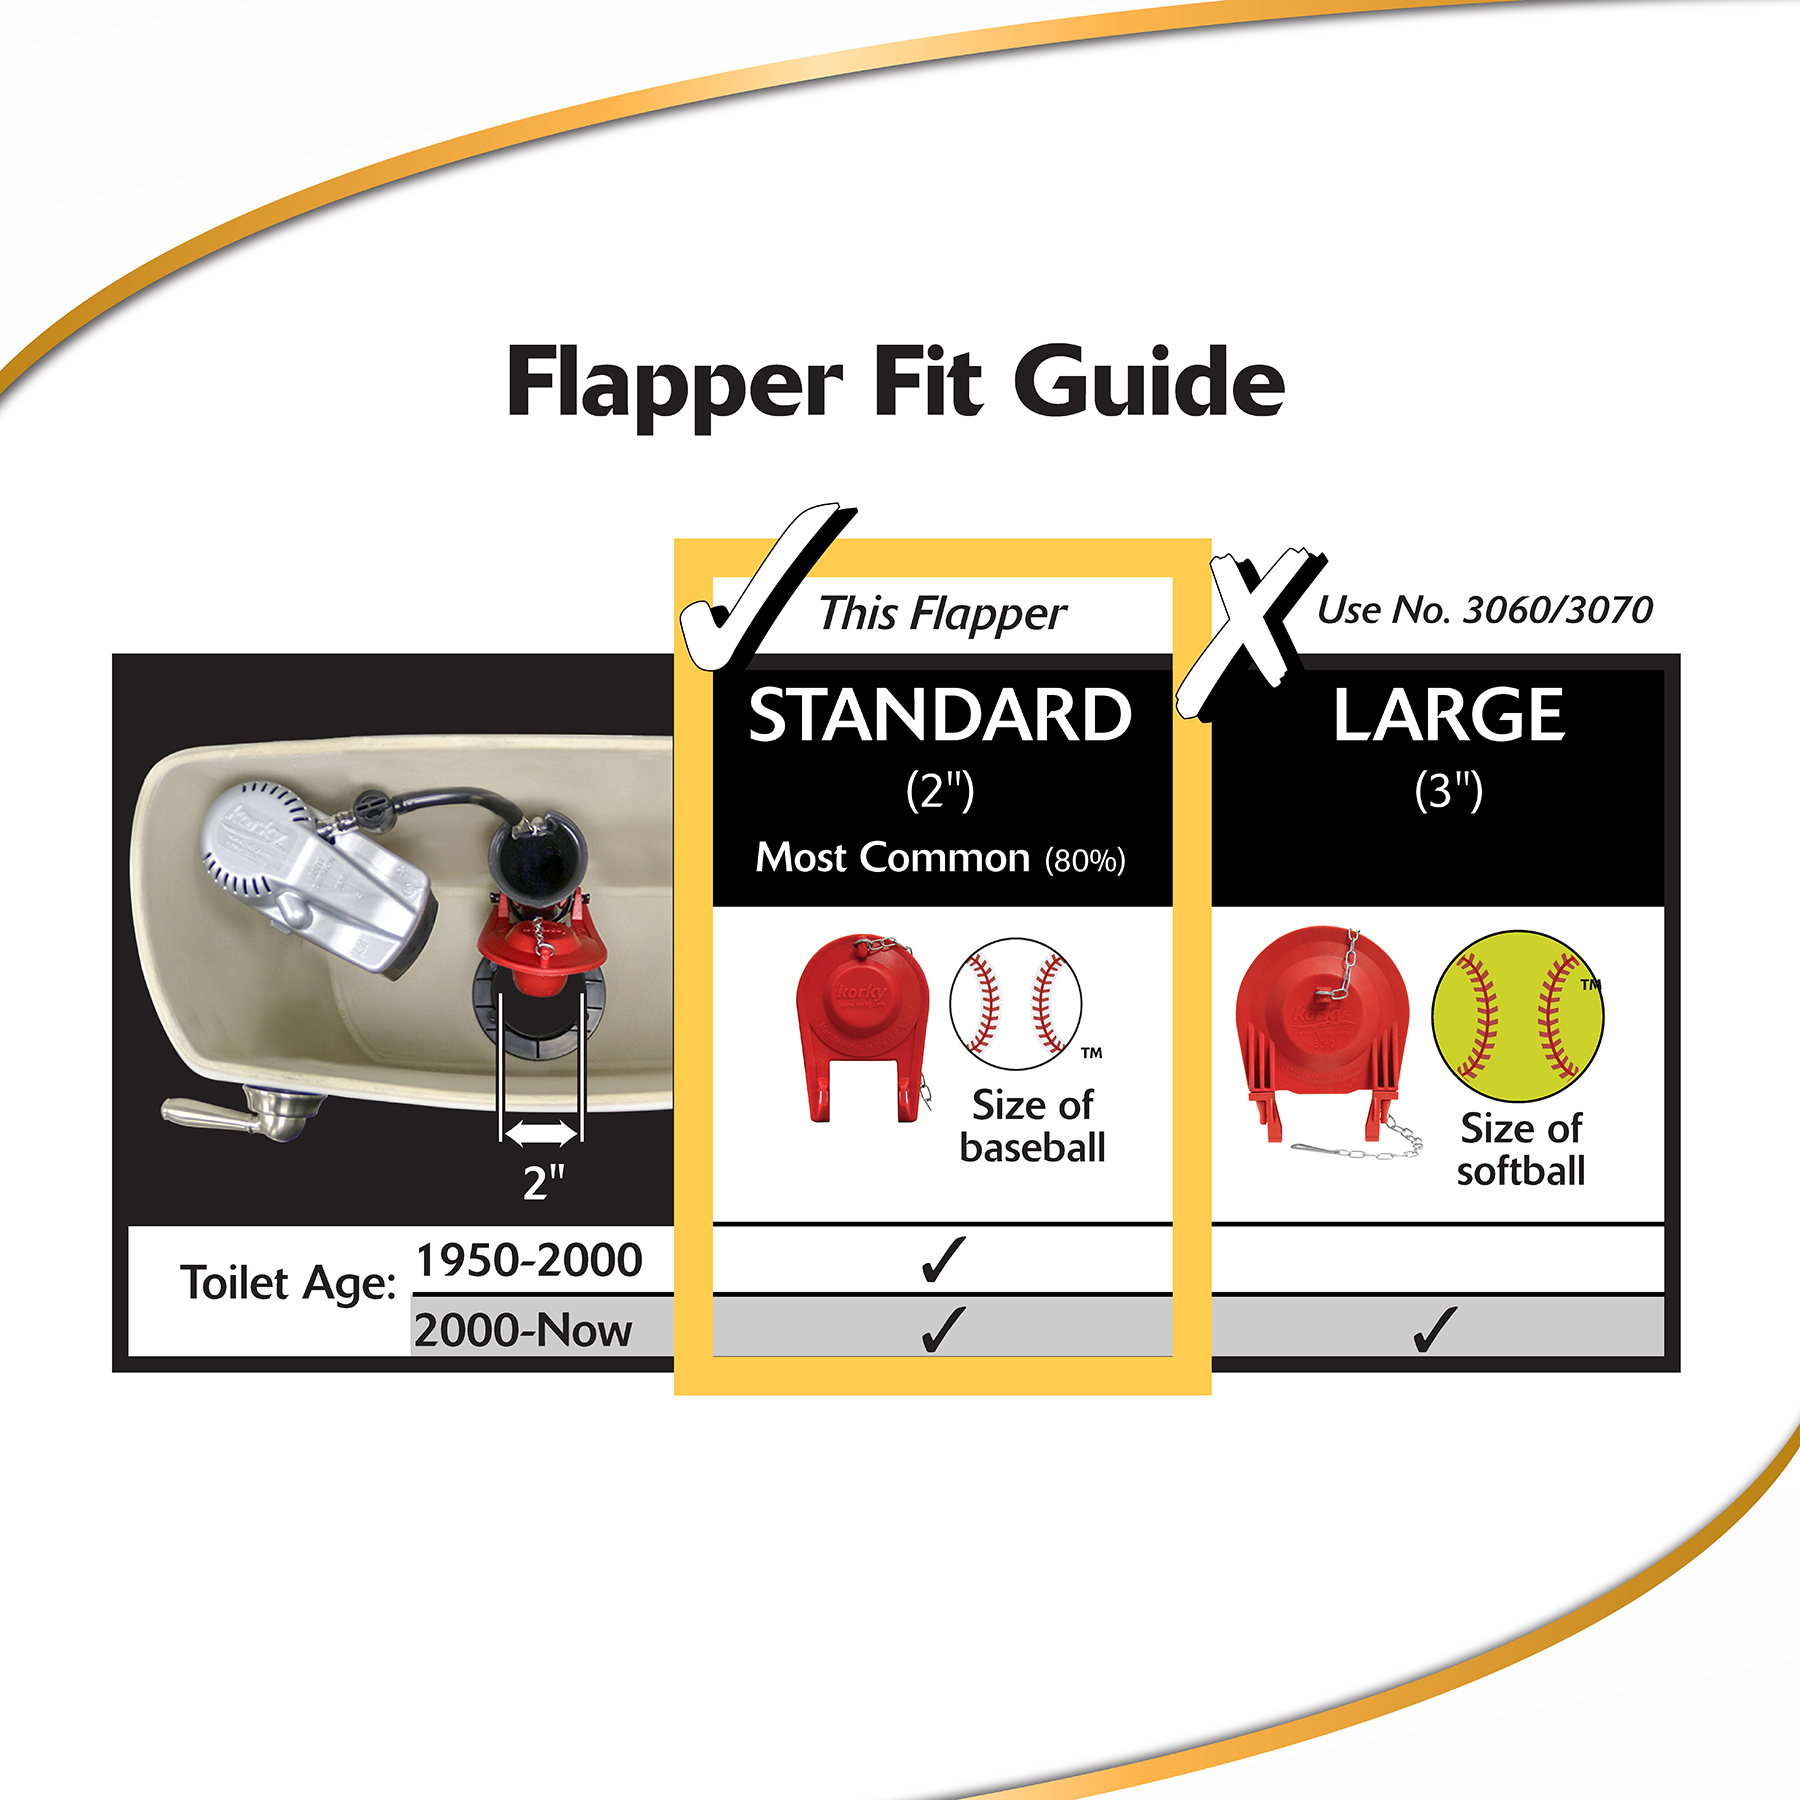 Standard 2 inch flapper fit guide